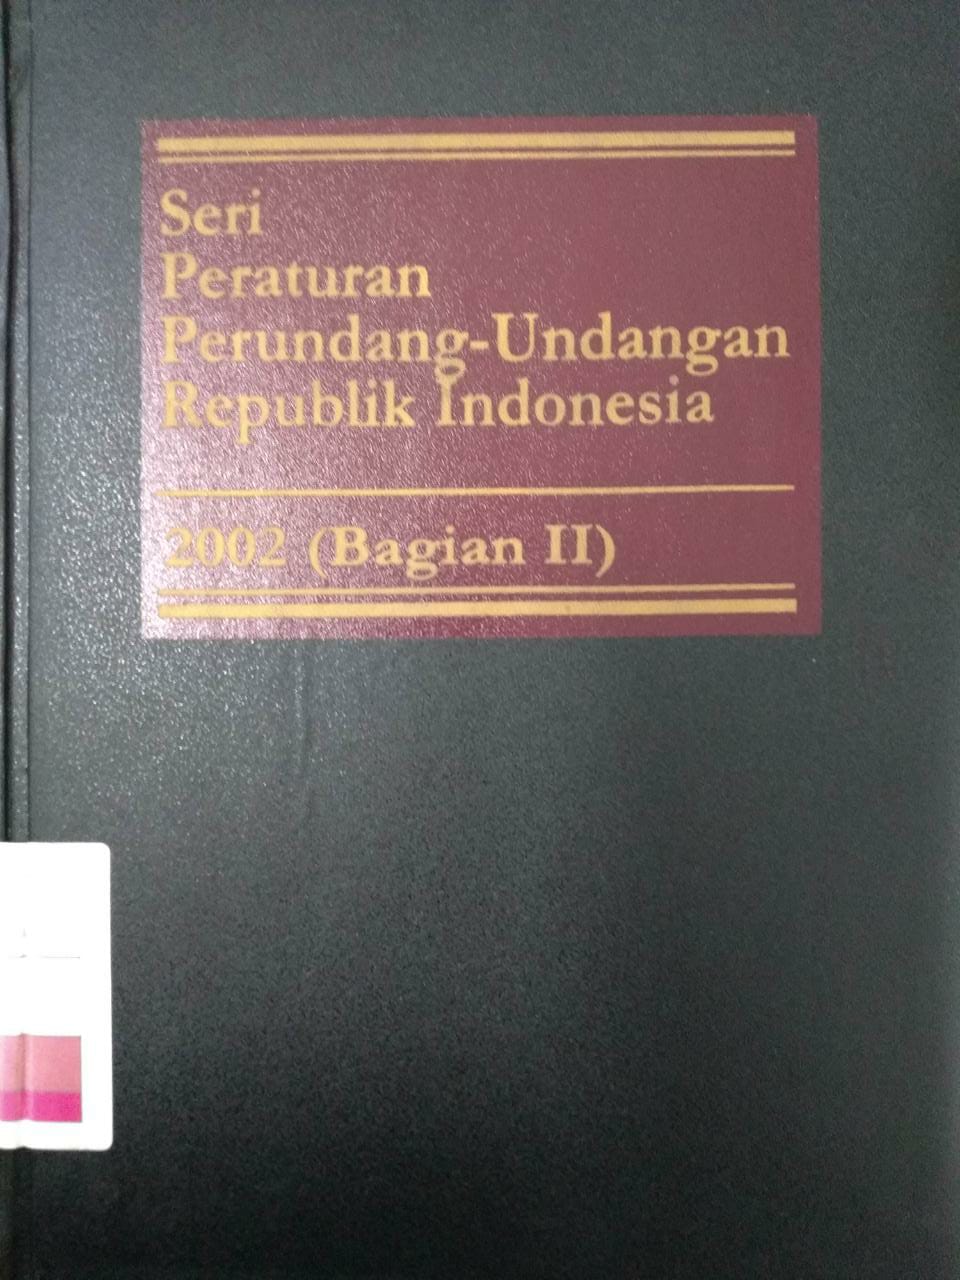 Seri Peraturan Perundang-undangan Republik Indonesia 2003 (Bagian IV). Jilid 2